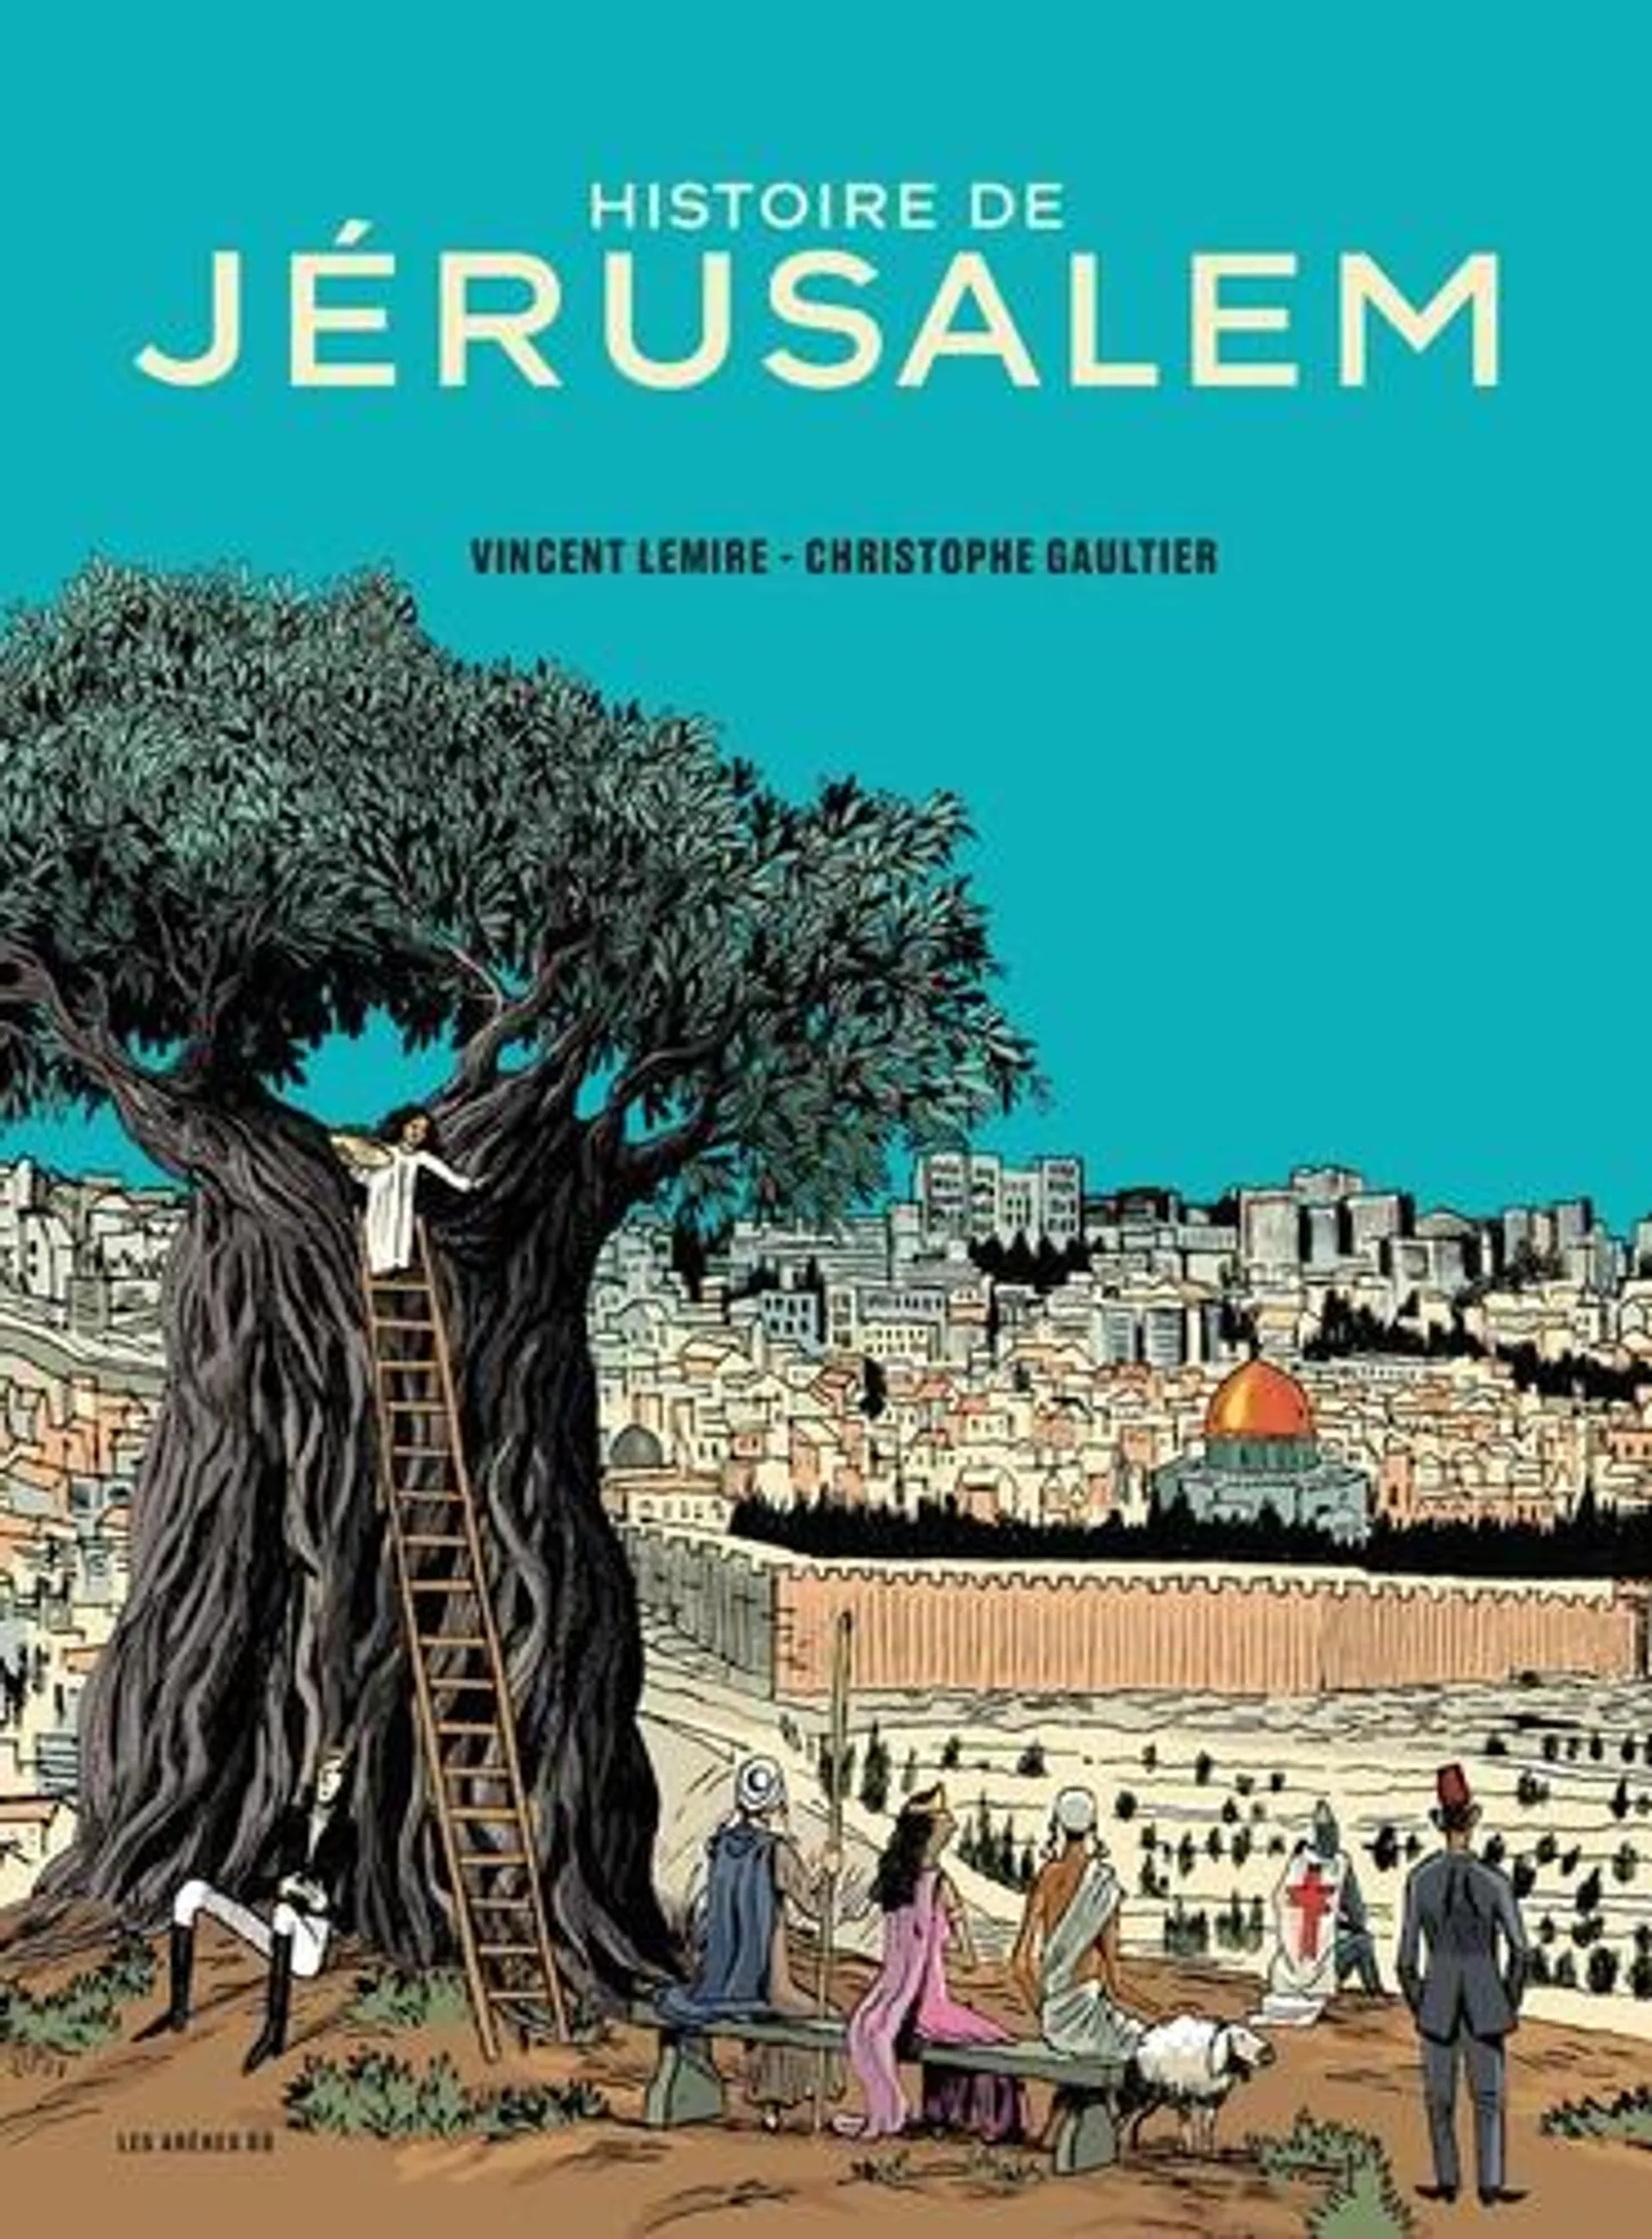 Histoire de Jérusalem - E-book - Epub fixed layout